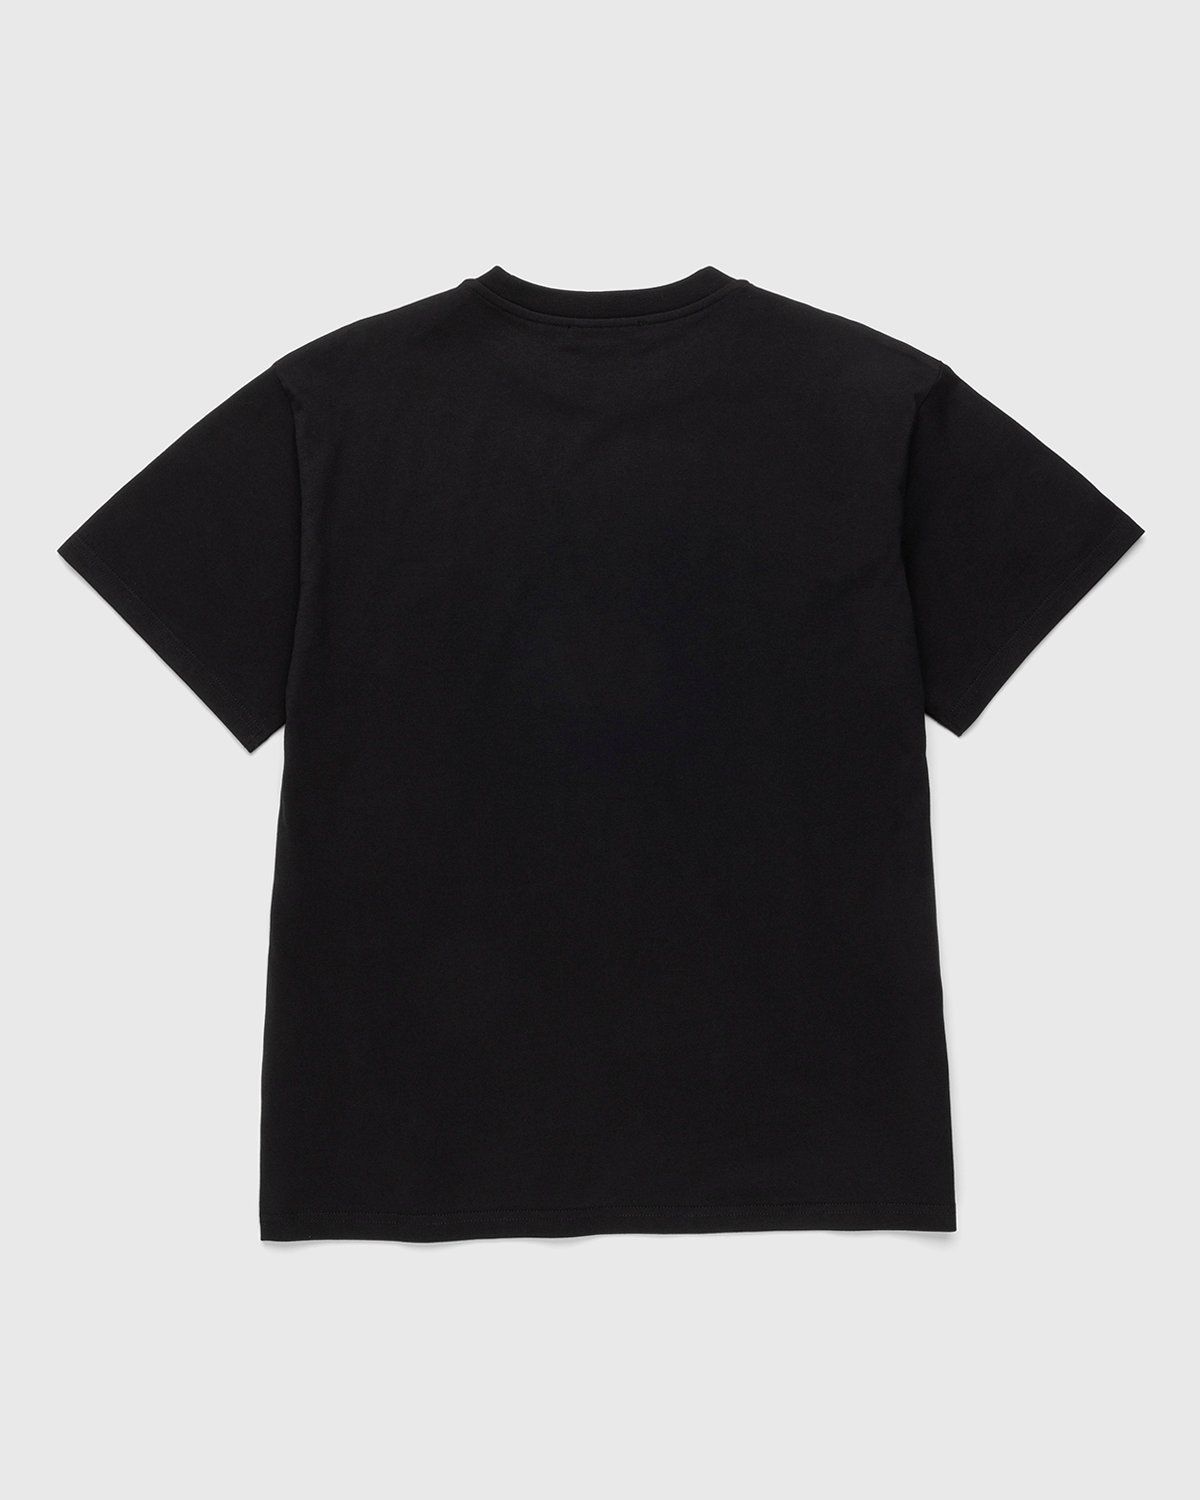 J.W. Anderson – Anchor Patch T-Shirt Black - T-Shirts - Black - Image 2